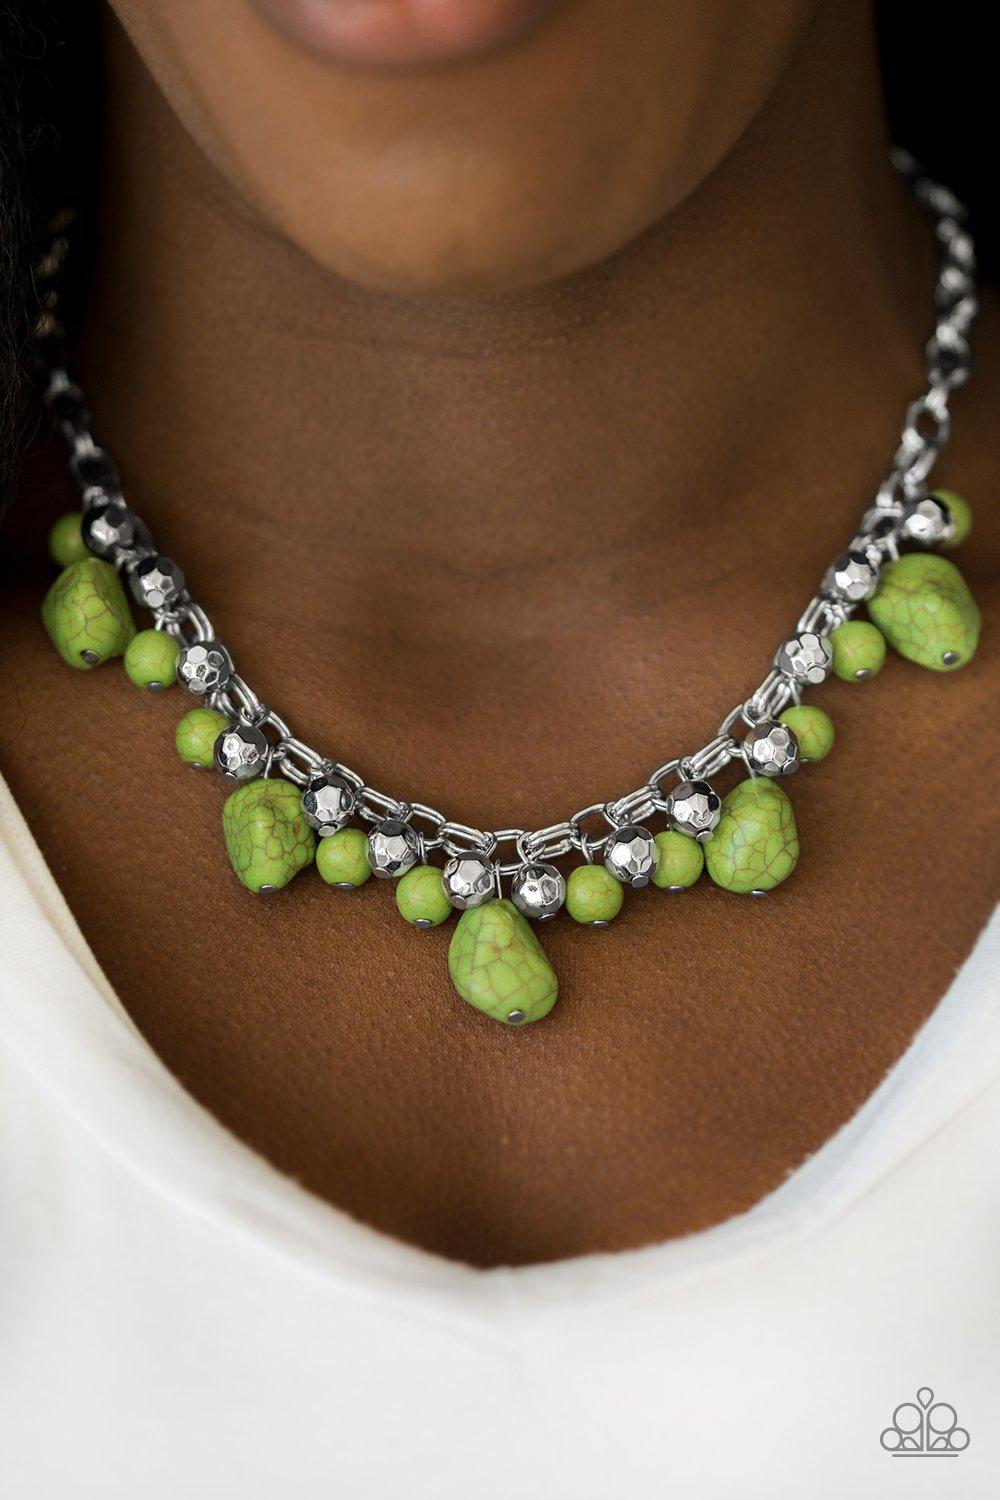 Paleo Princess Green Stone Necklace - Paparazzi Accessories - model -CarasShop.com - $5 Jewelry by Cara Jewels